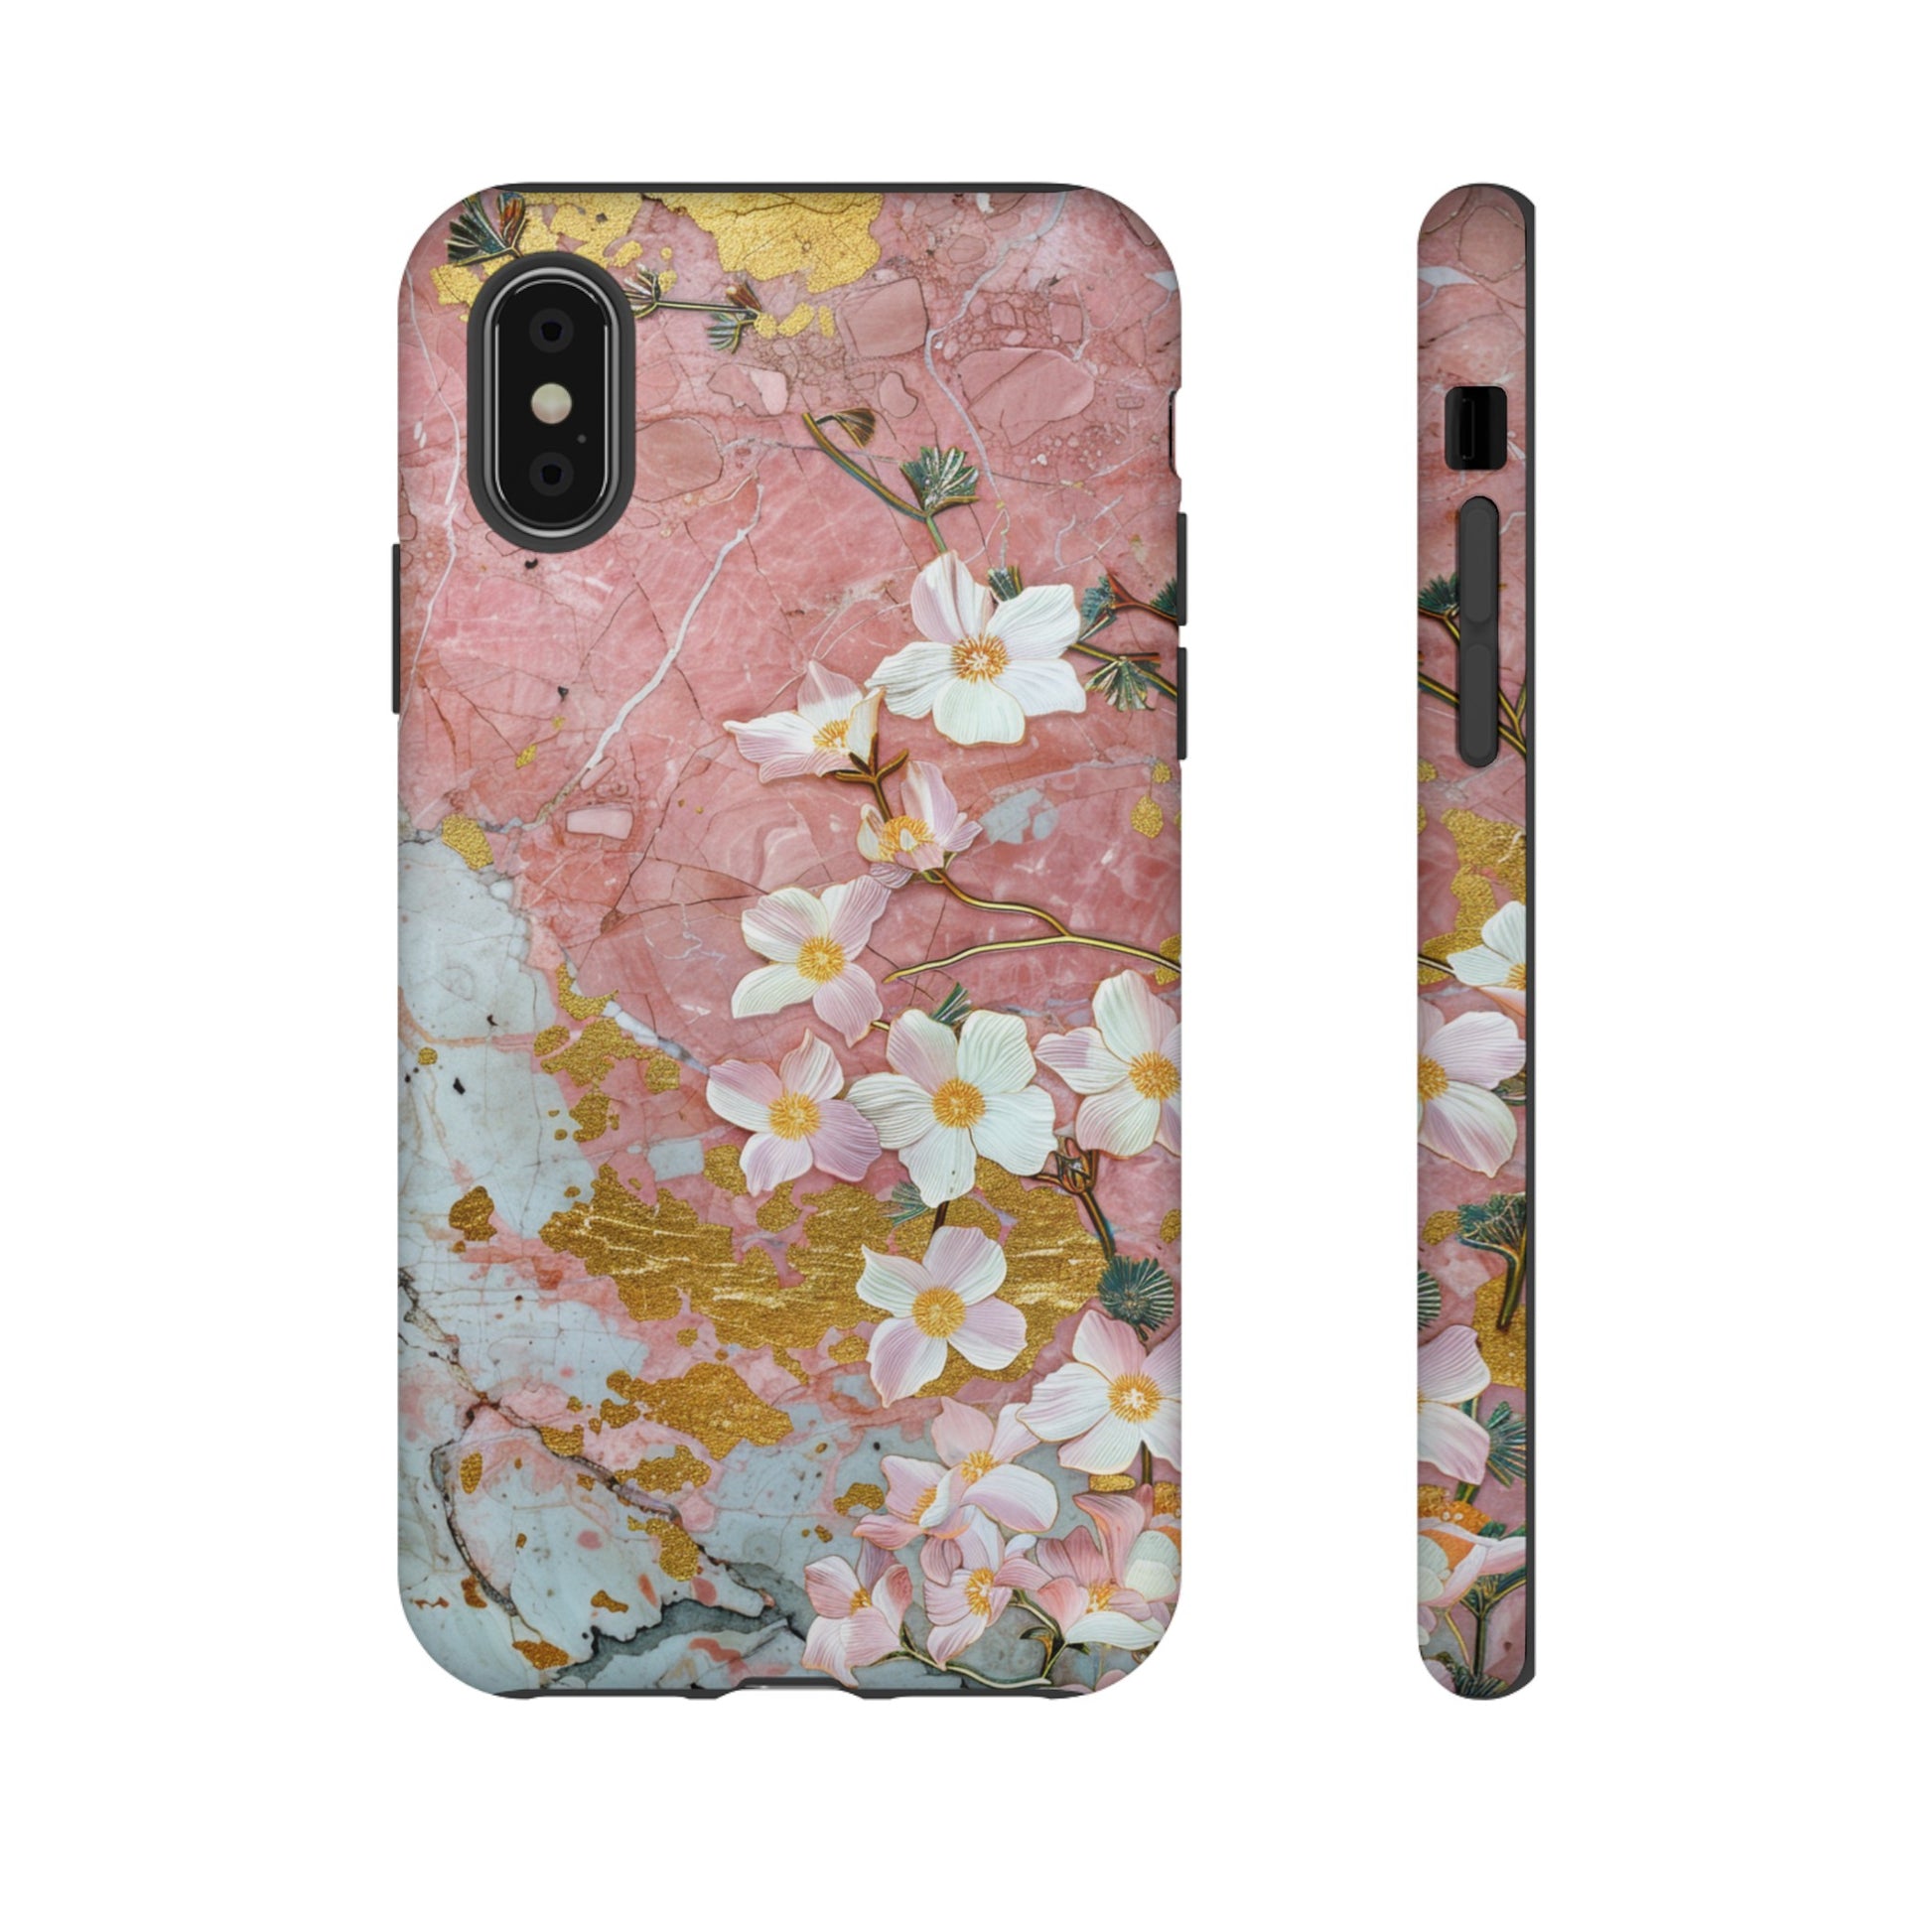 Flower Power Phone Case